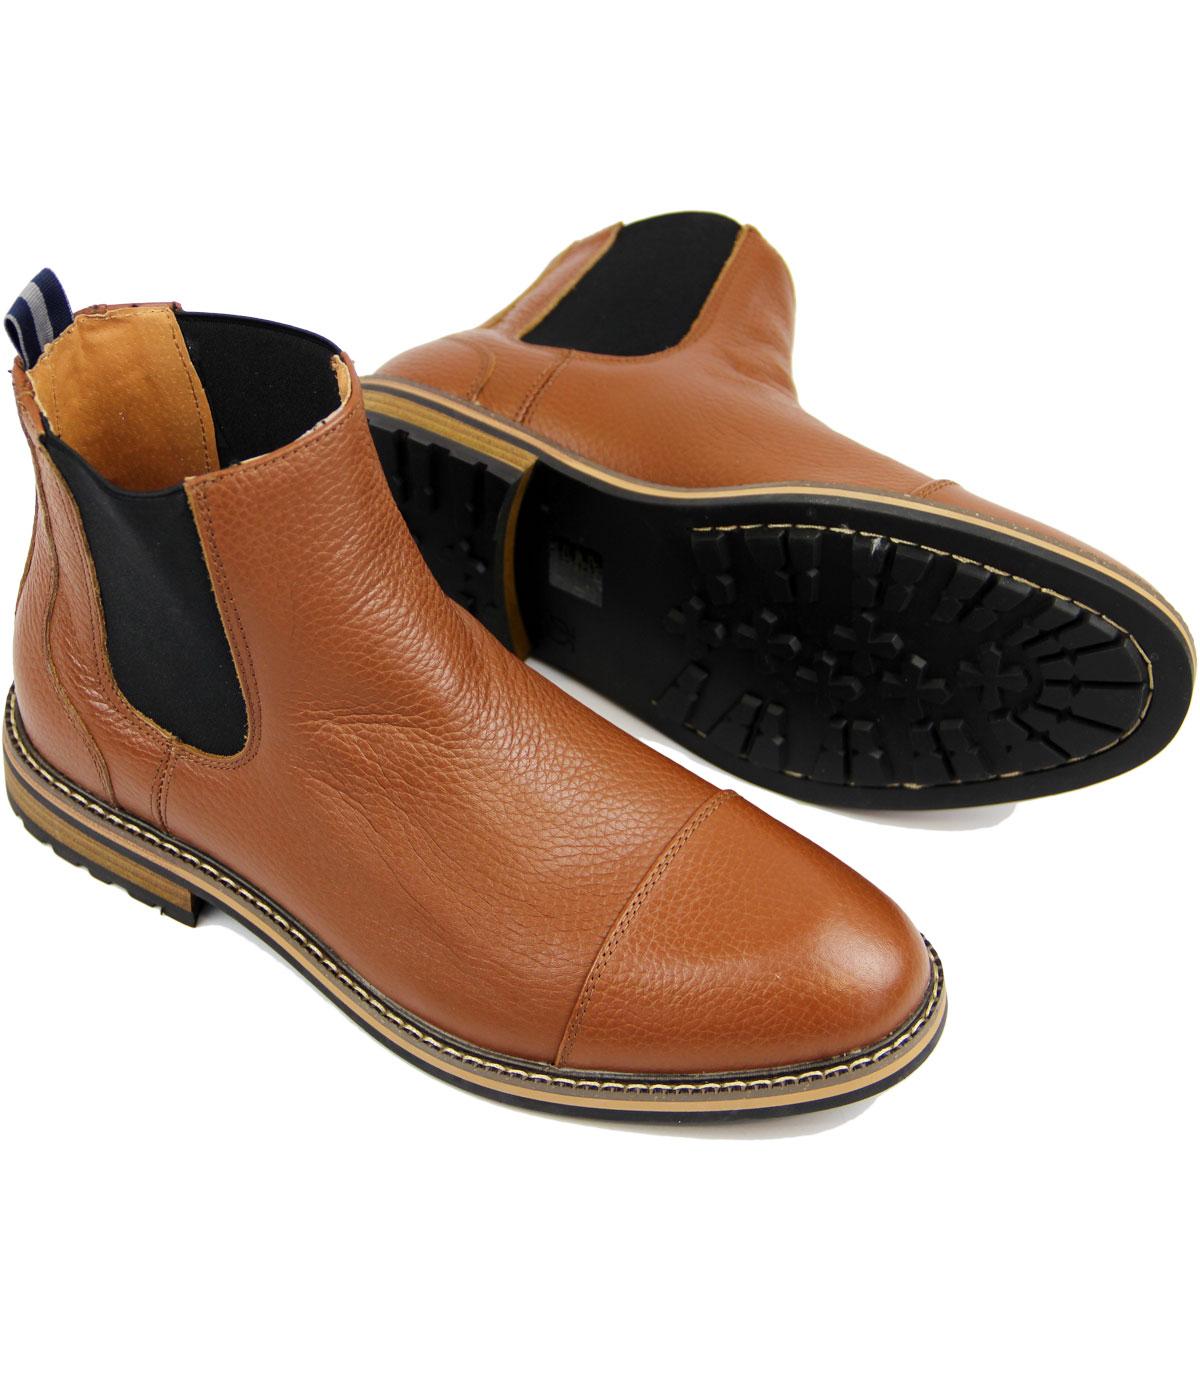 PETER WERTH Retro Mod Toe Cap Leather Chelsea Boots Tan